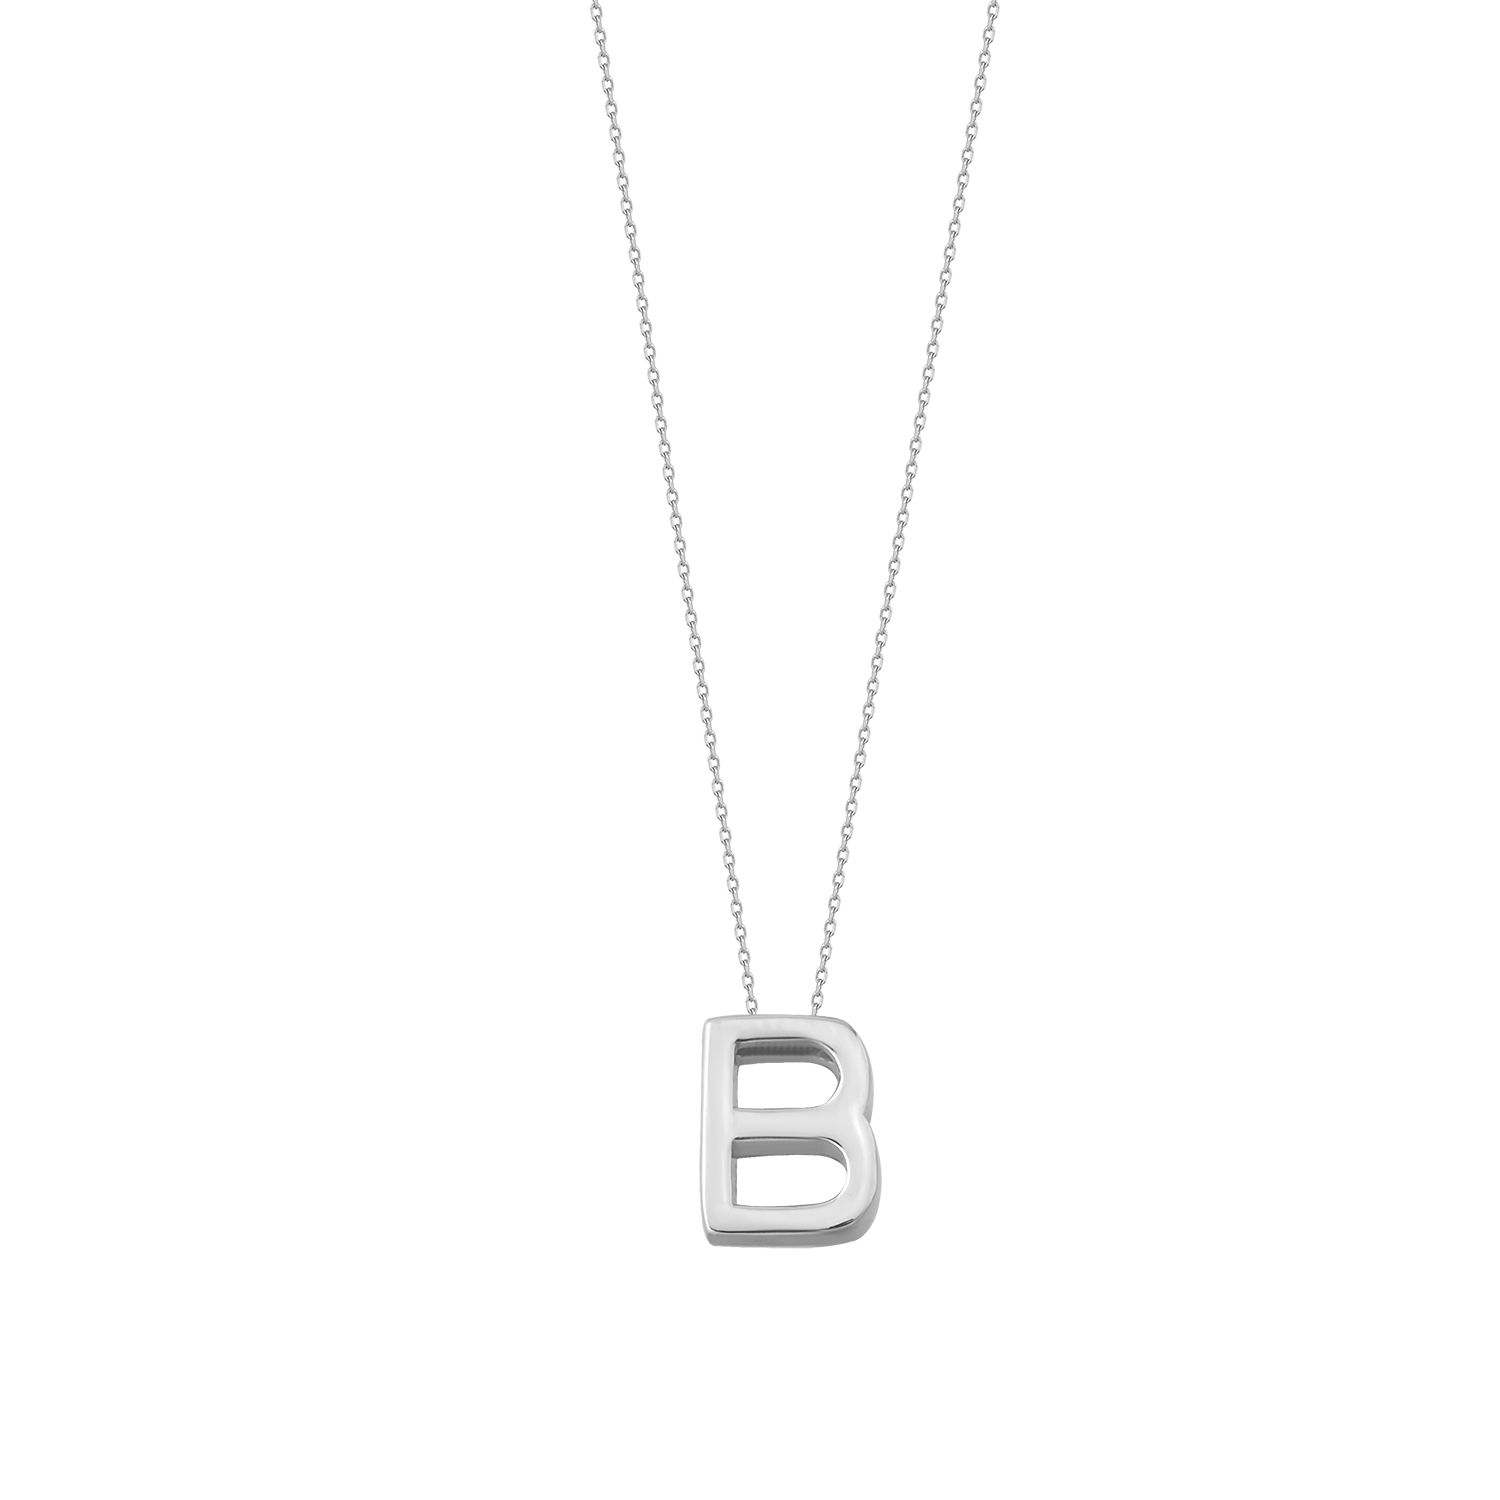 Silver Necklace Alphabet Collection Plain Letters 925 Sterling